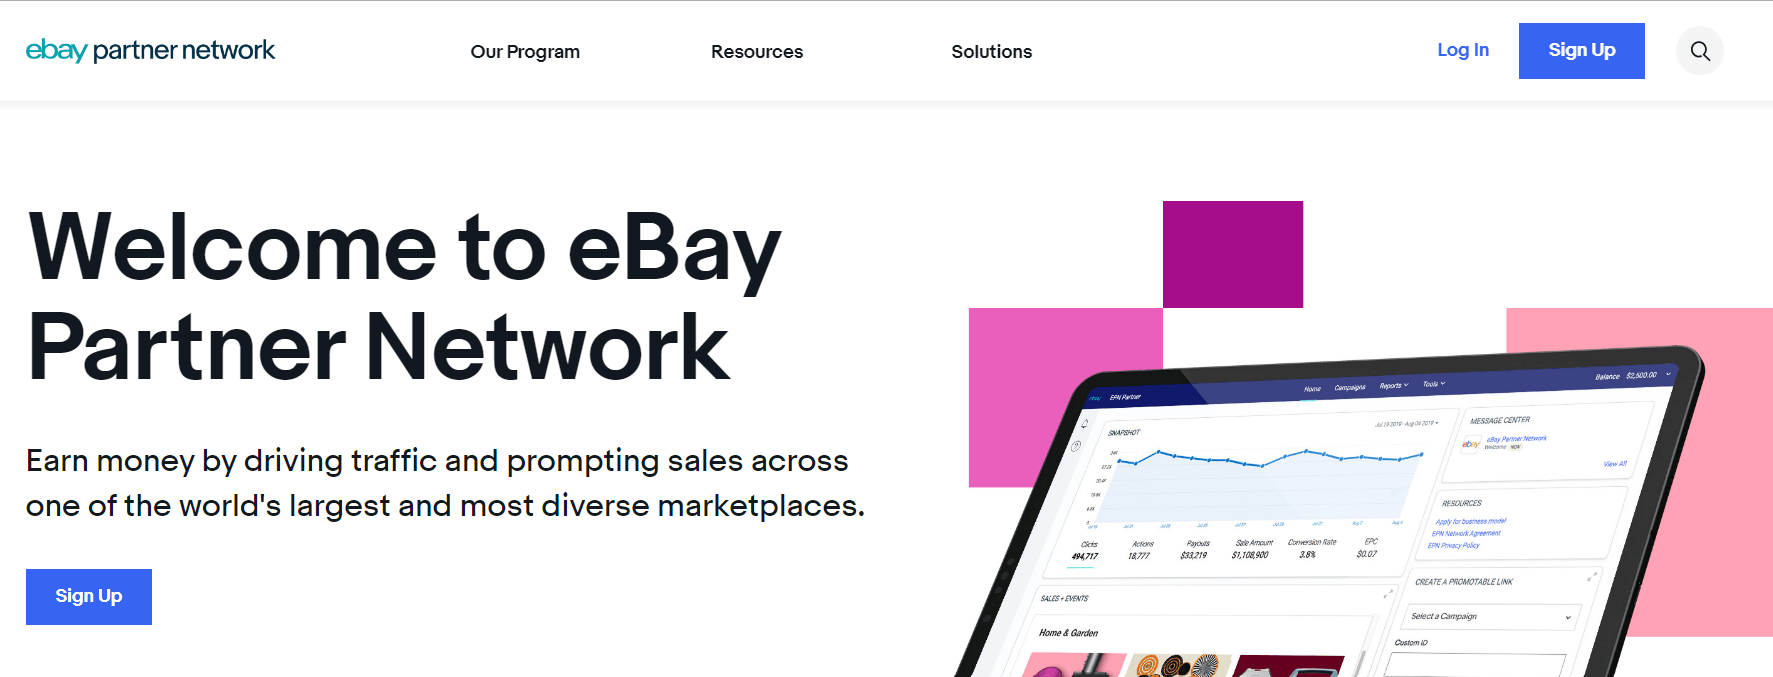 ebay partners